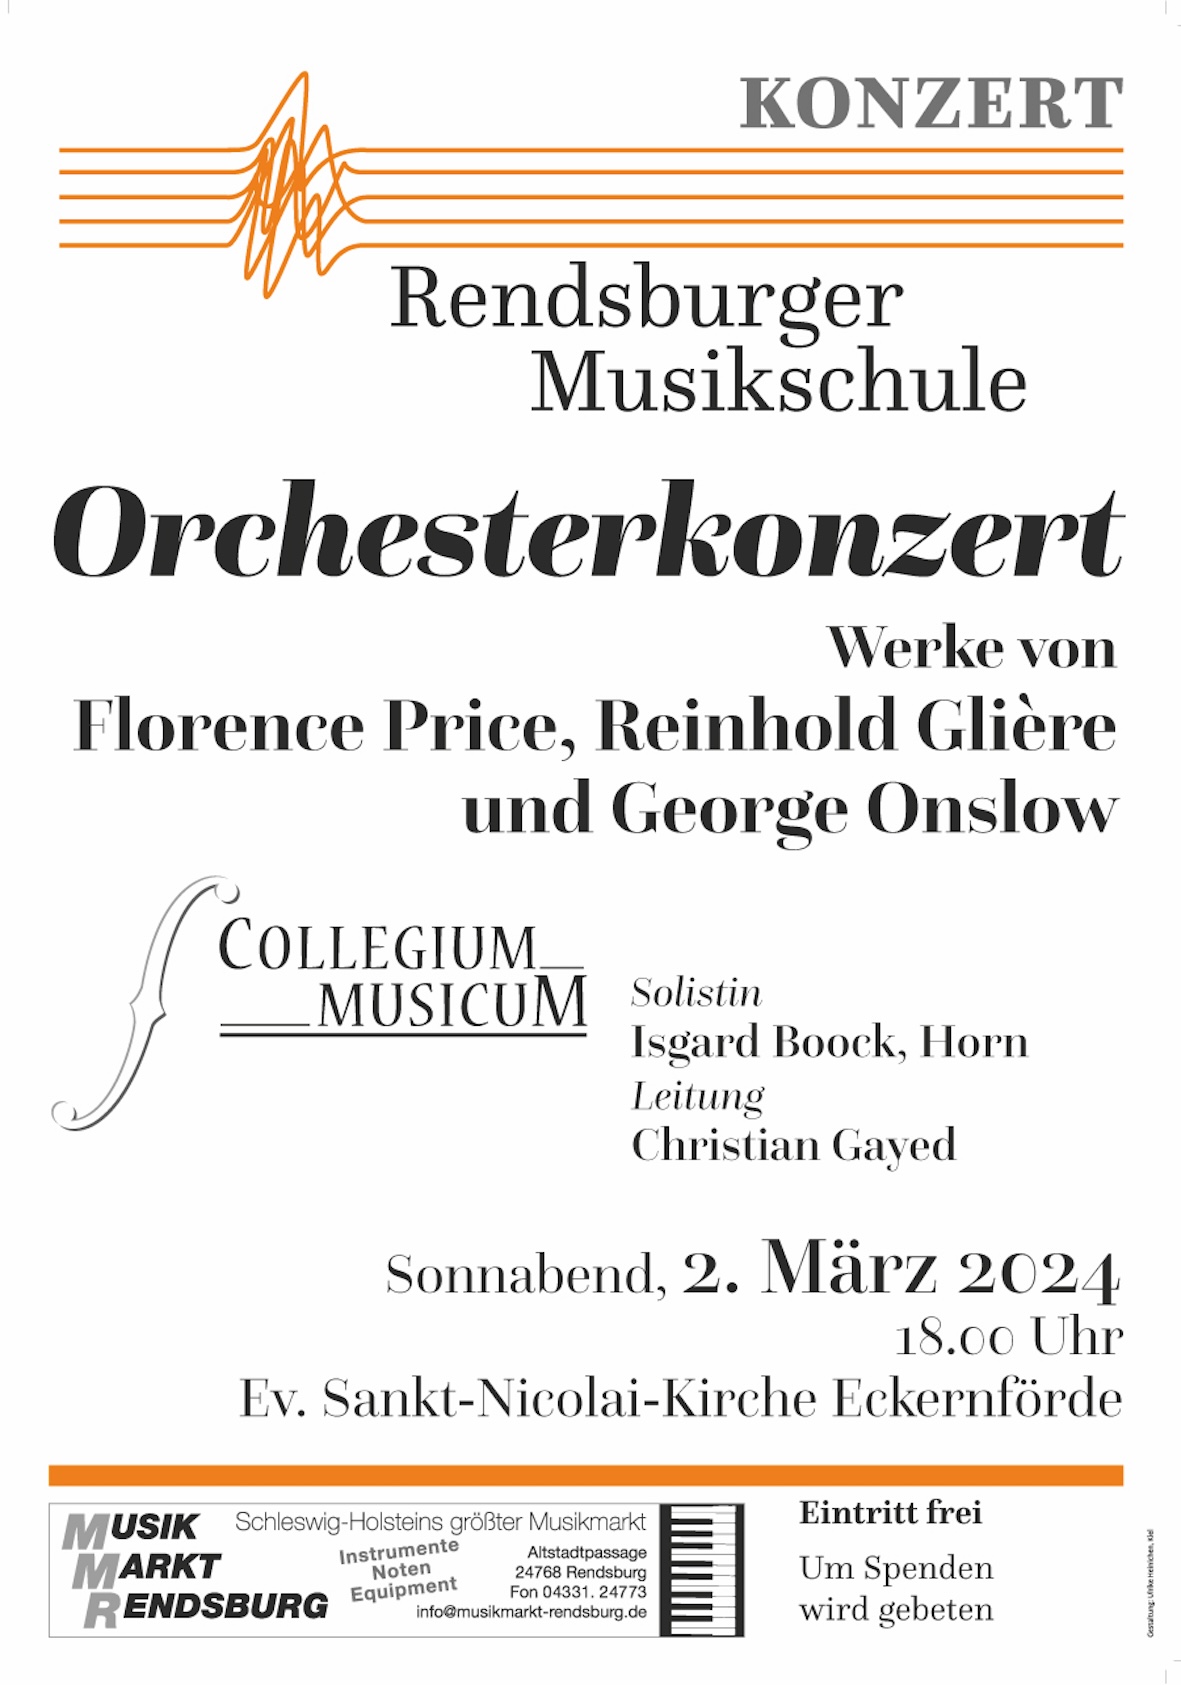 Konzert der Rendsburger Musikschule: Collegium musicum (St. Nicolai-Kirche)